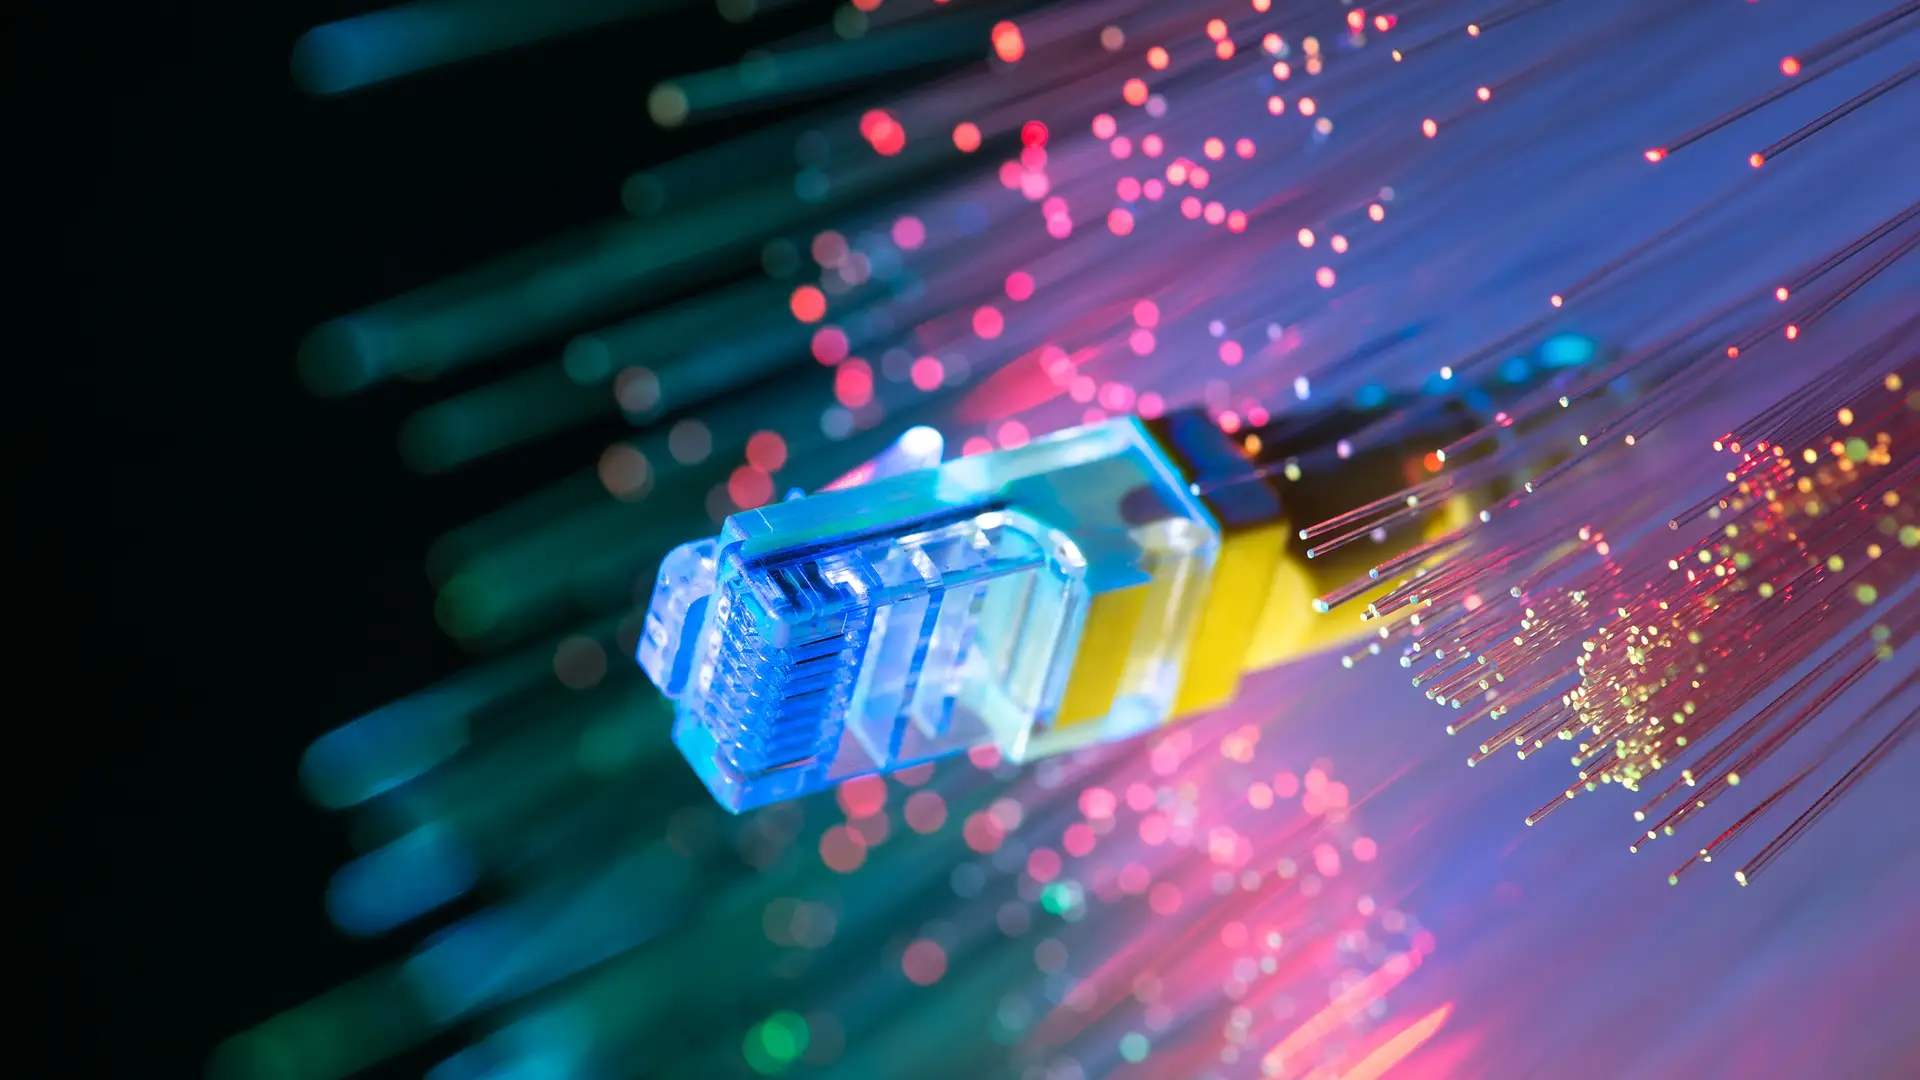 Broadband wires from BT provider